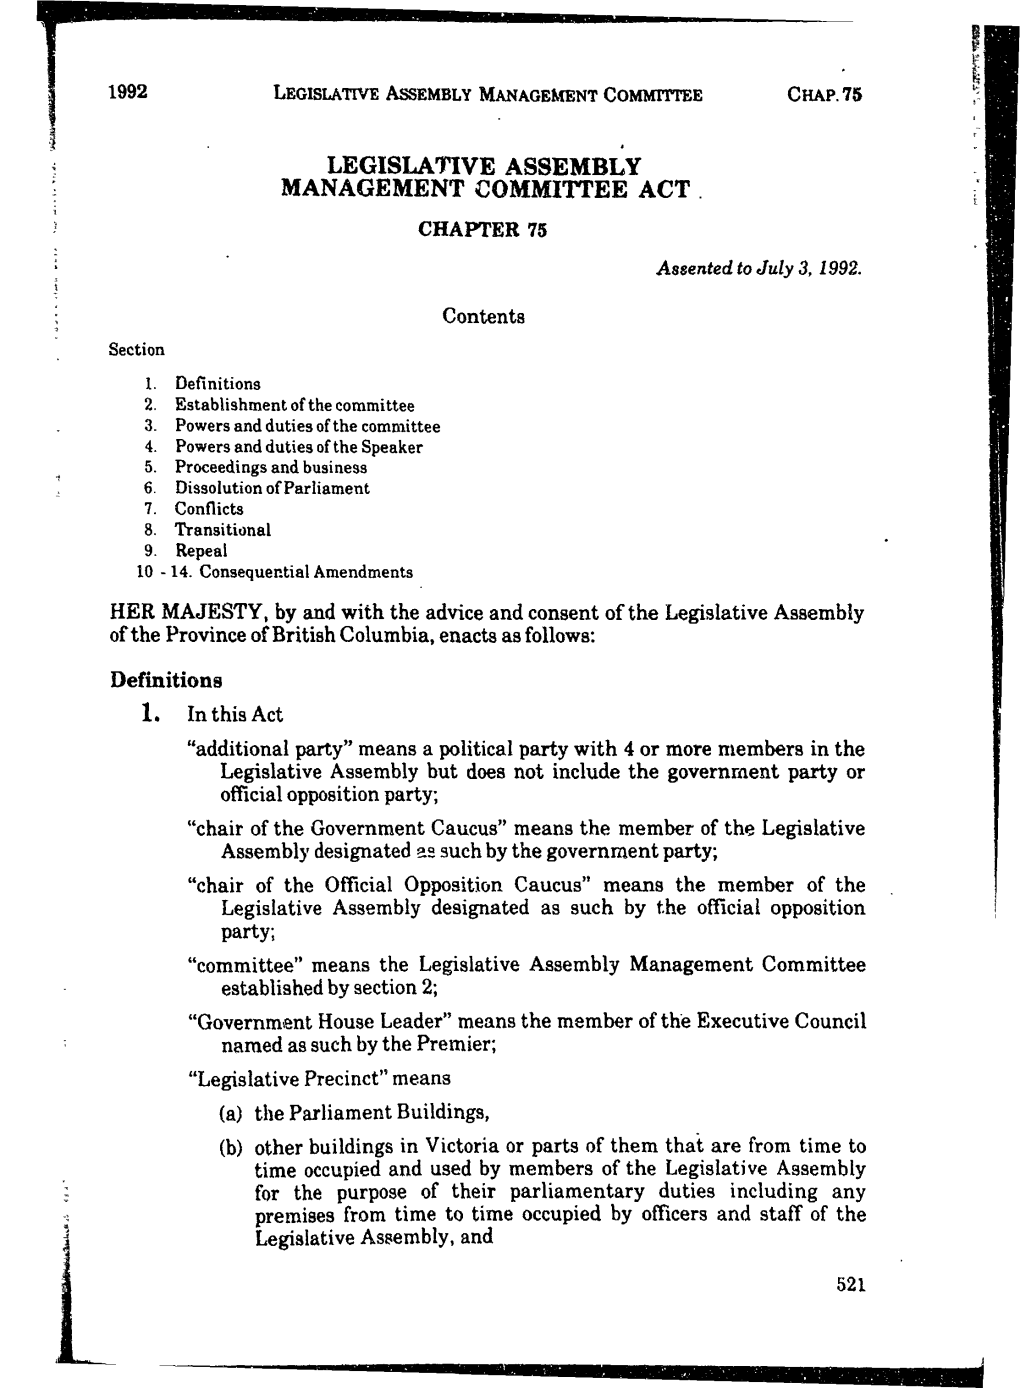 Legislative Assembly Management Committee Chap